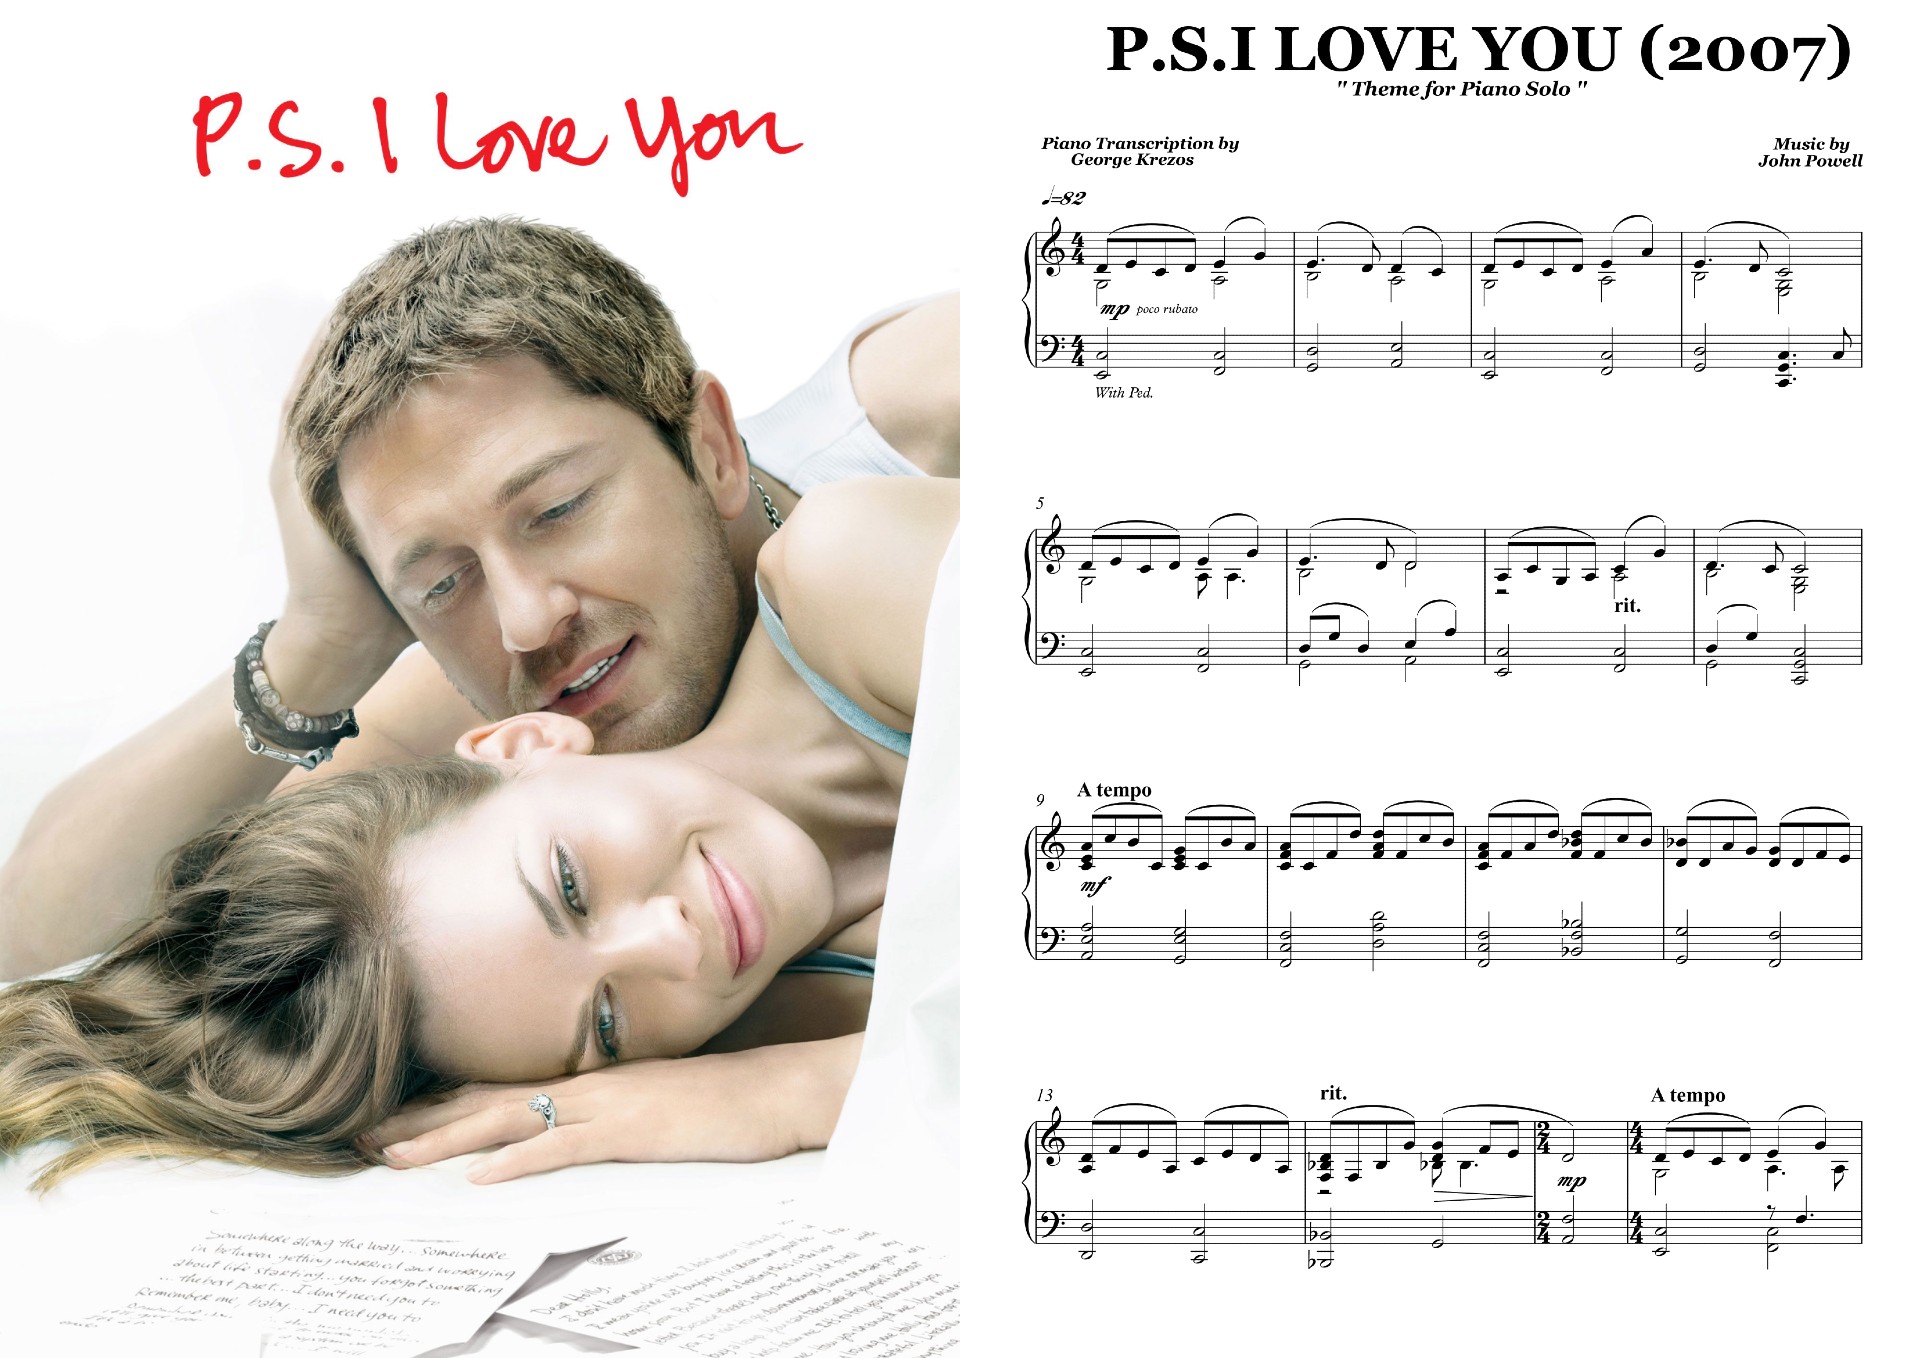 P.S. I LOVE YOU - Main Theme.jpg